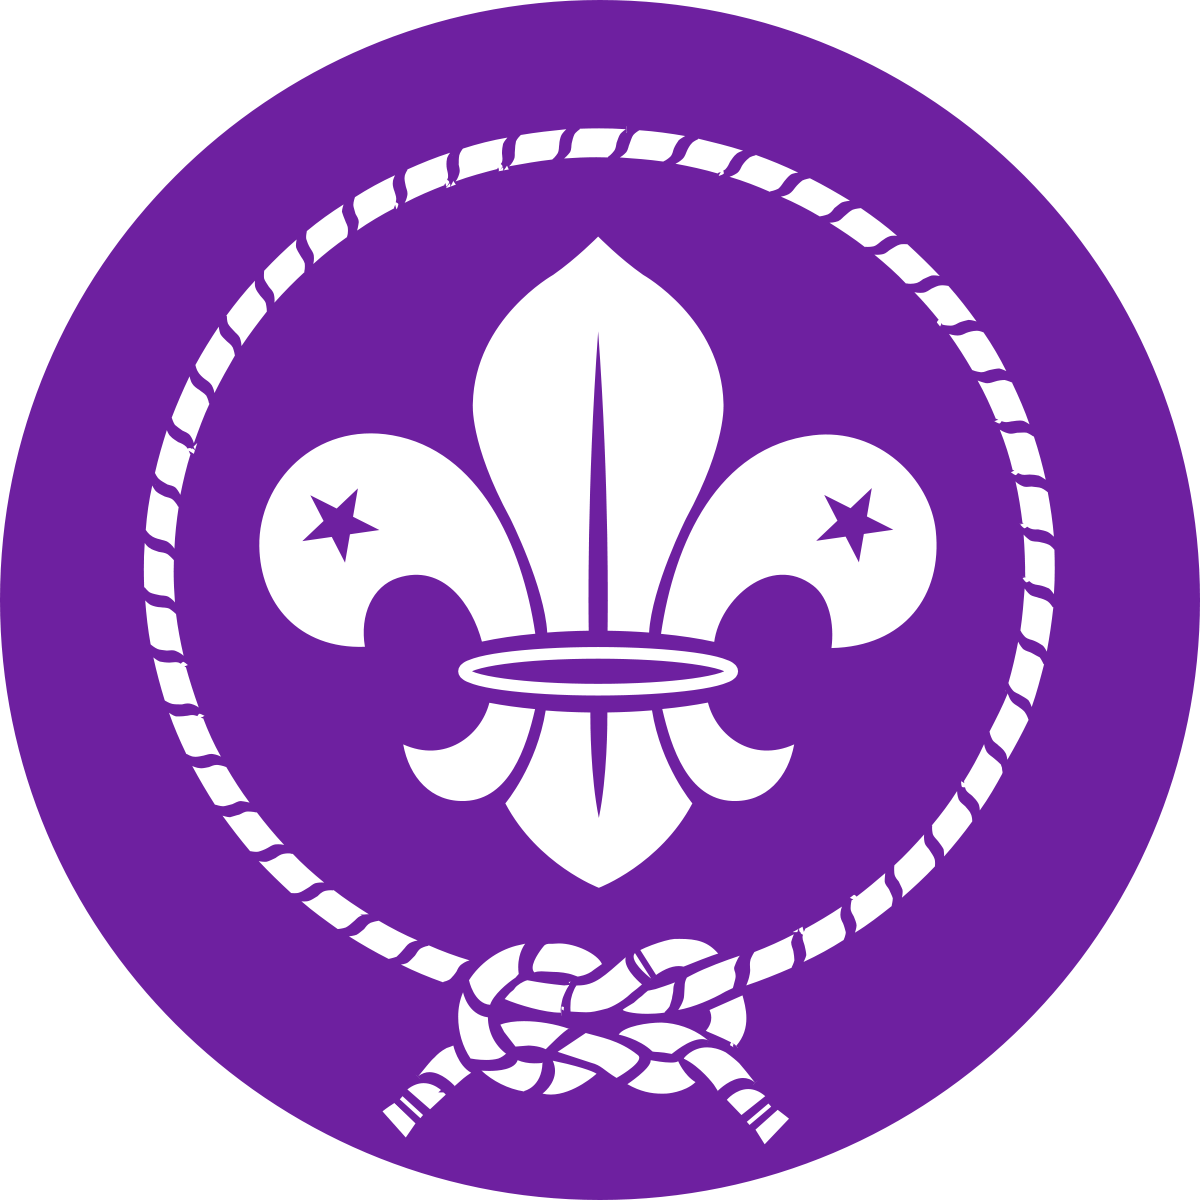 World Scout Emblem.